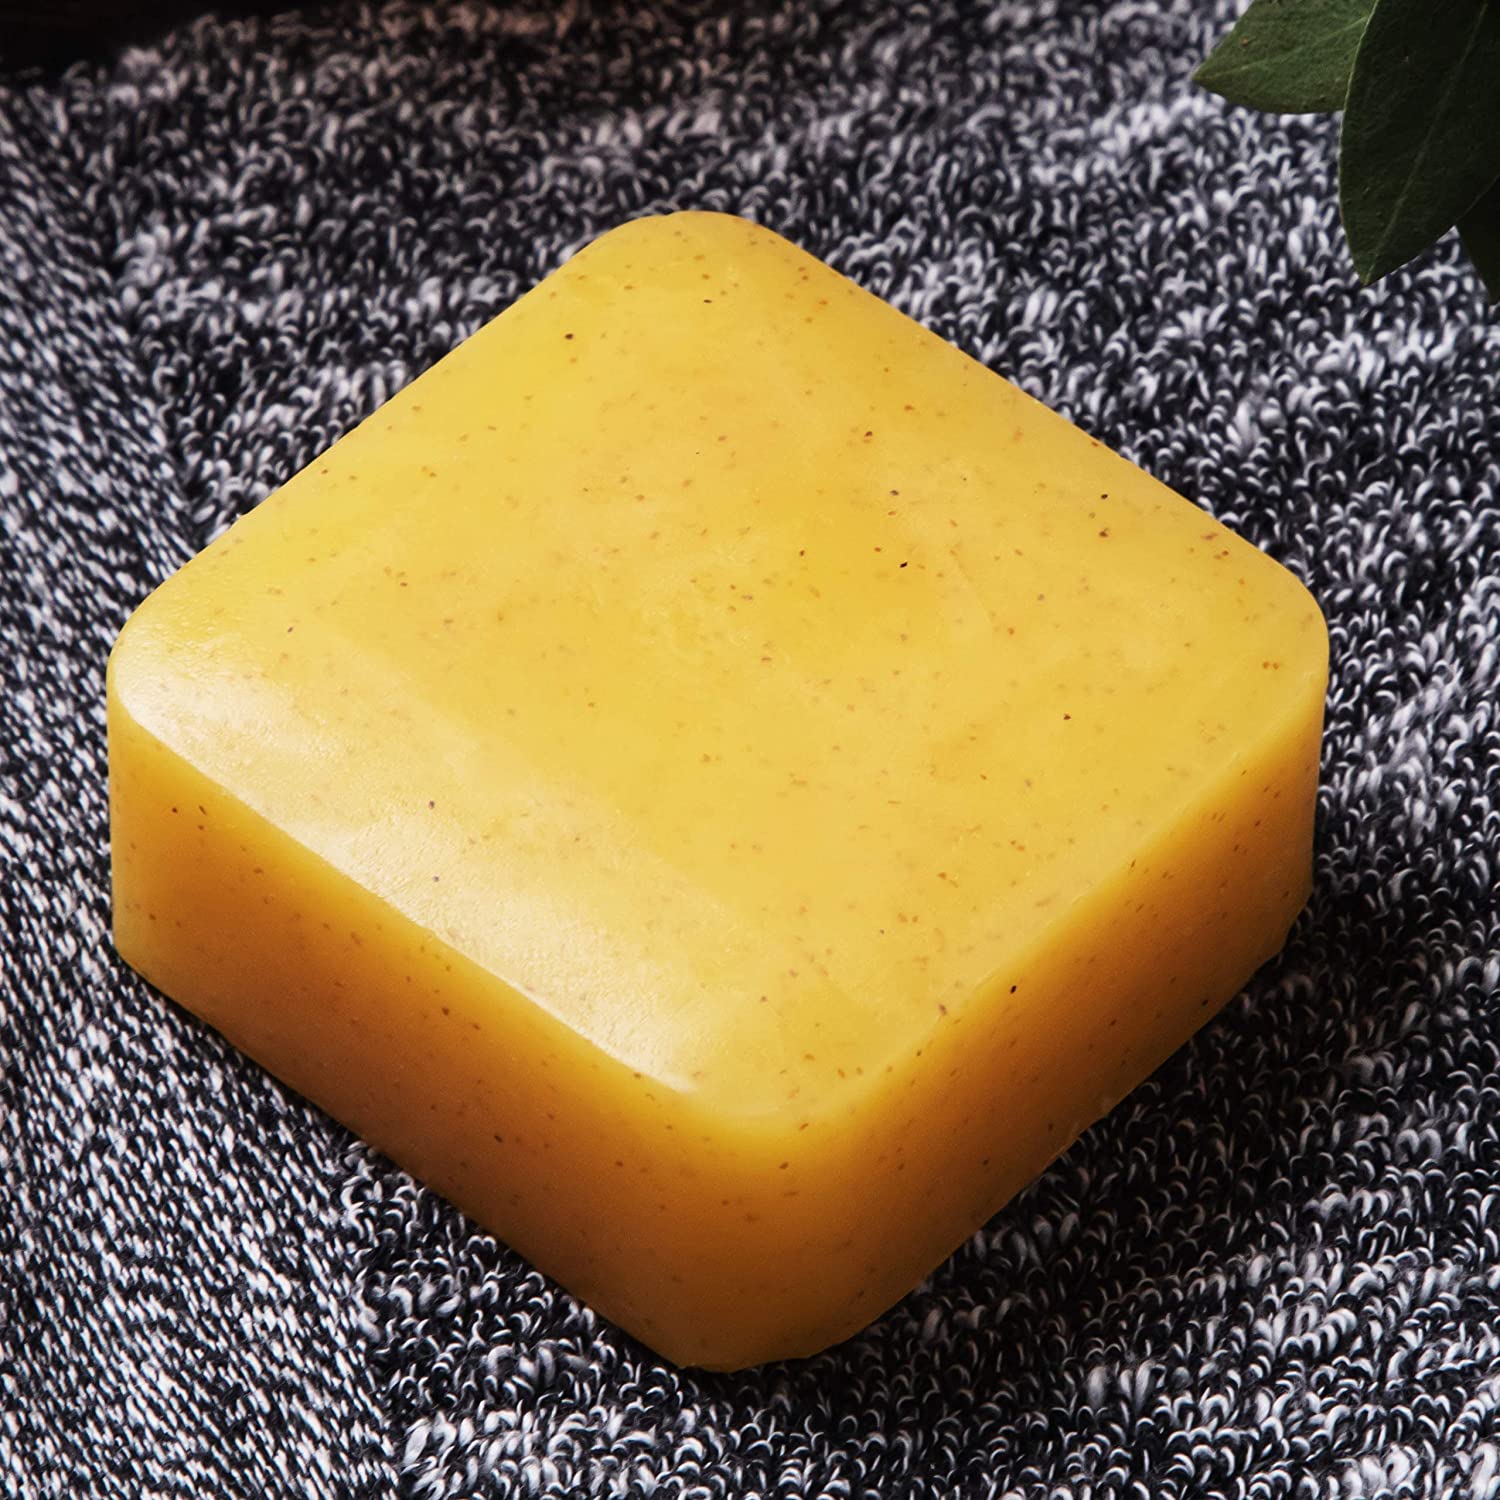 Tame the Wild Orange Walnut Beard Soap - Natural Beard Wash - Beard Shampoo & Conditioner - Exfoliating Face & Body Scrub - Made of Shea Butter & Coconut Oil - 3 Pack Set of 5oz Bars - image 2 of 7